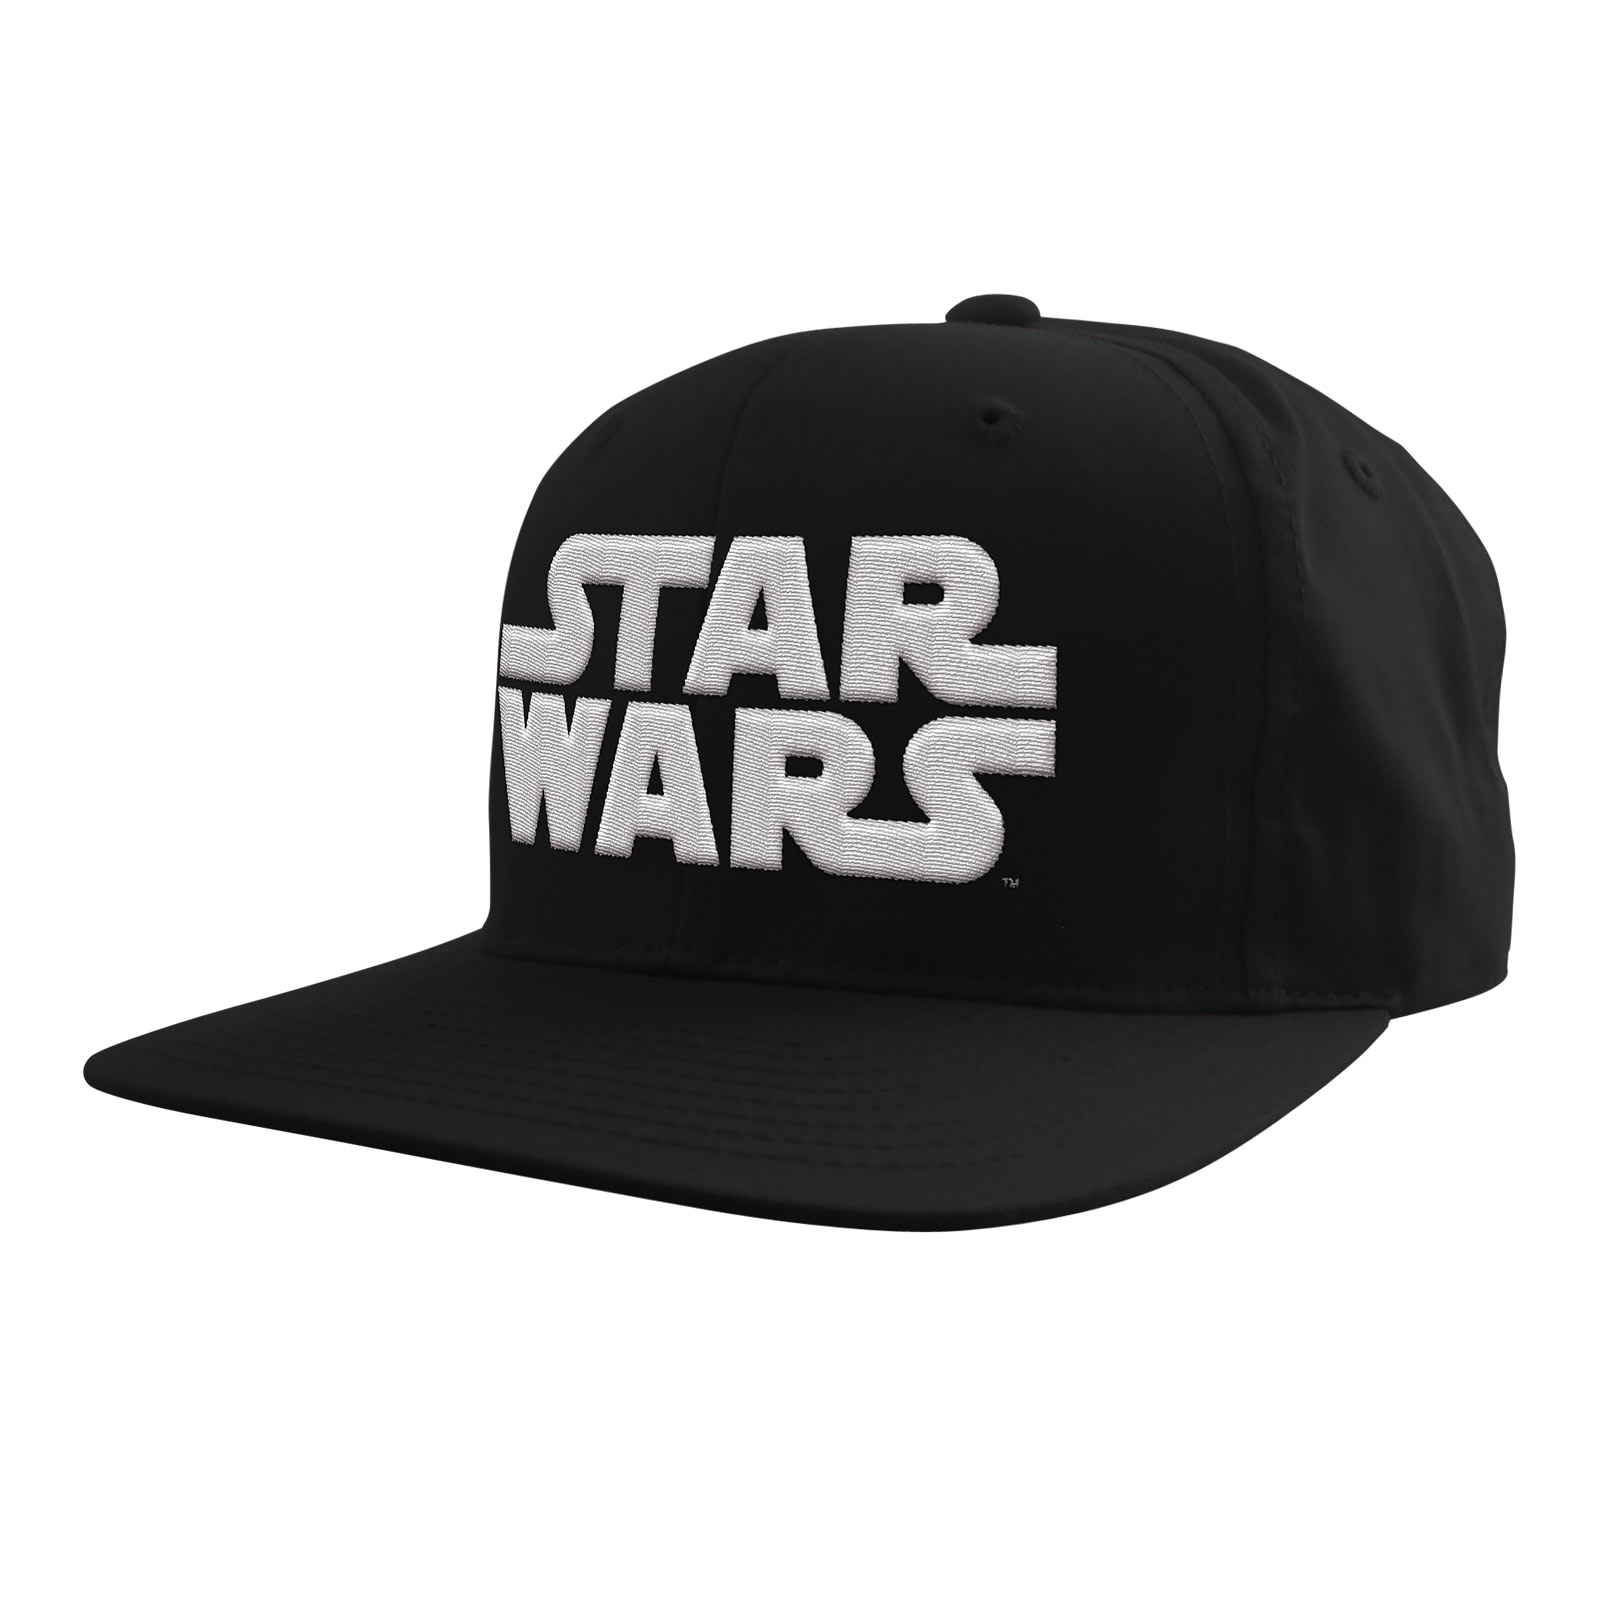 Star Wars - Logo White Snapback Cap